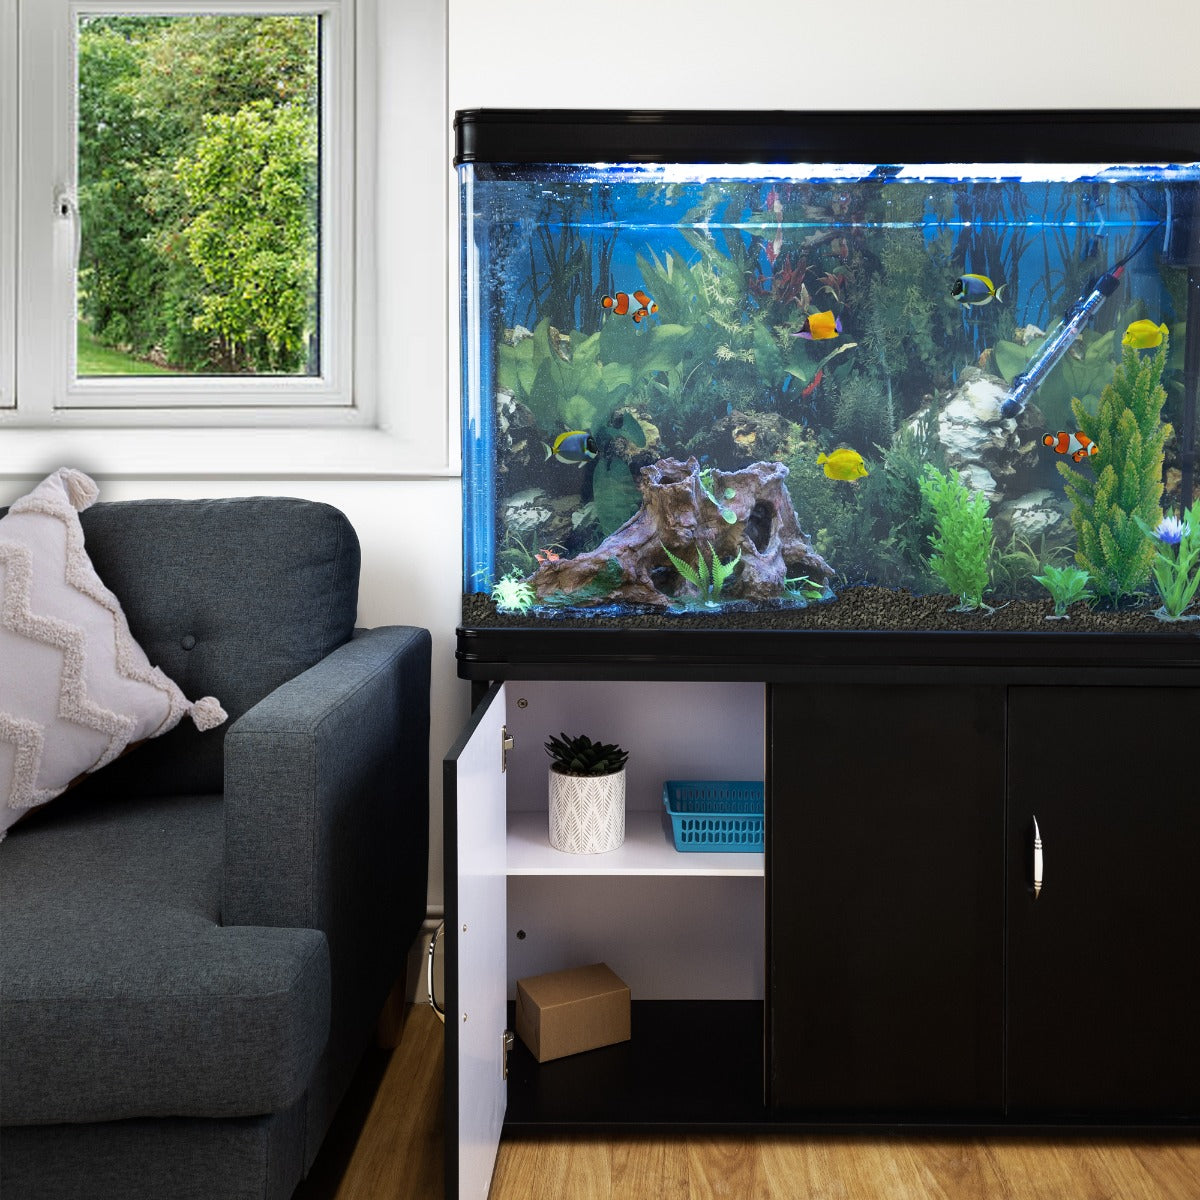 Aquarium Fish Tank & Cabinet with Complete Starter Kit - Black Tank & Black Gravel